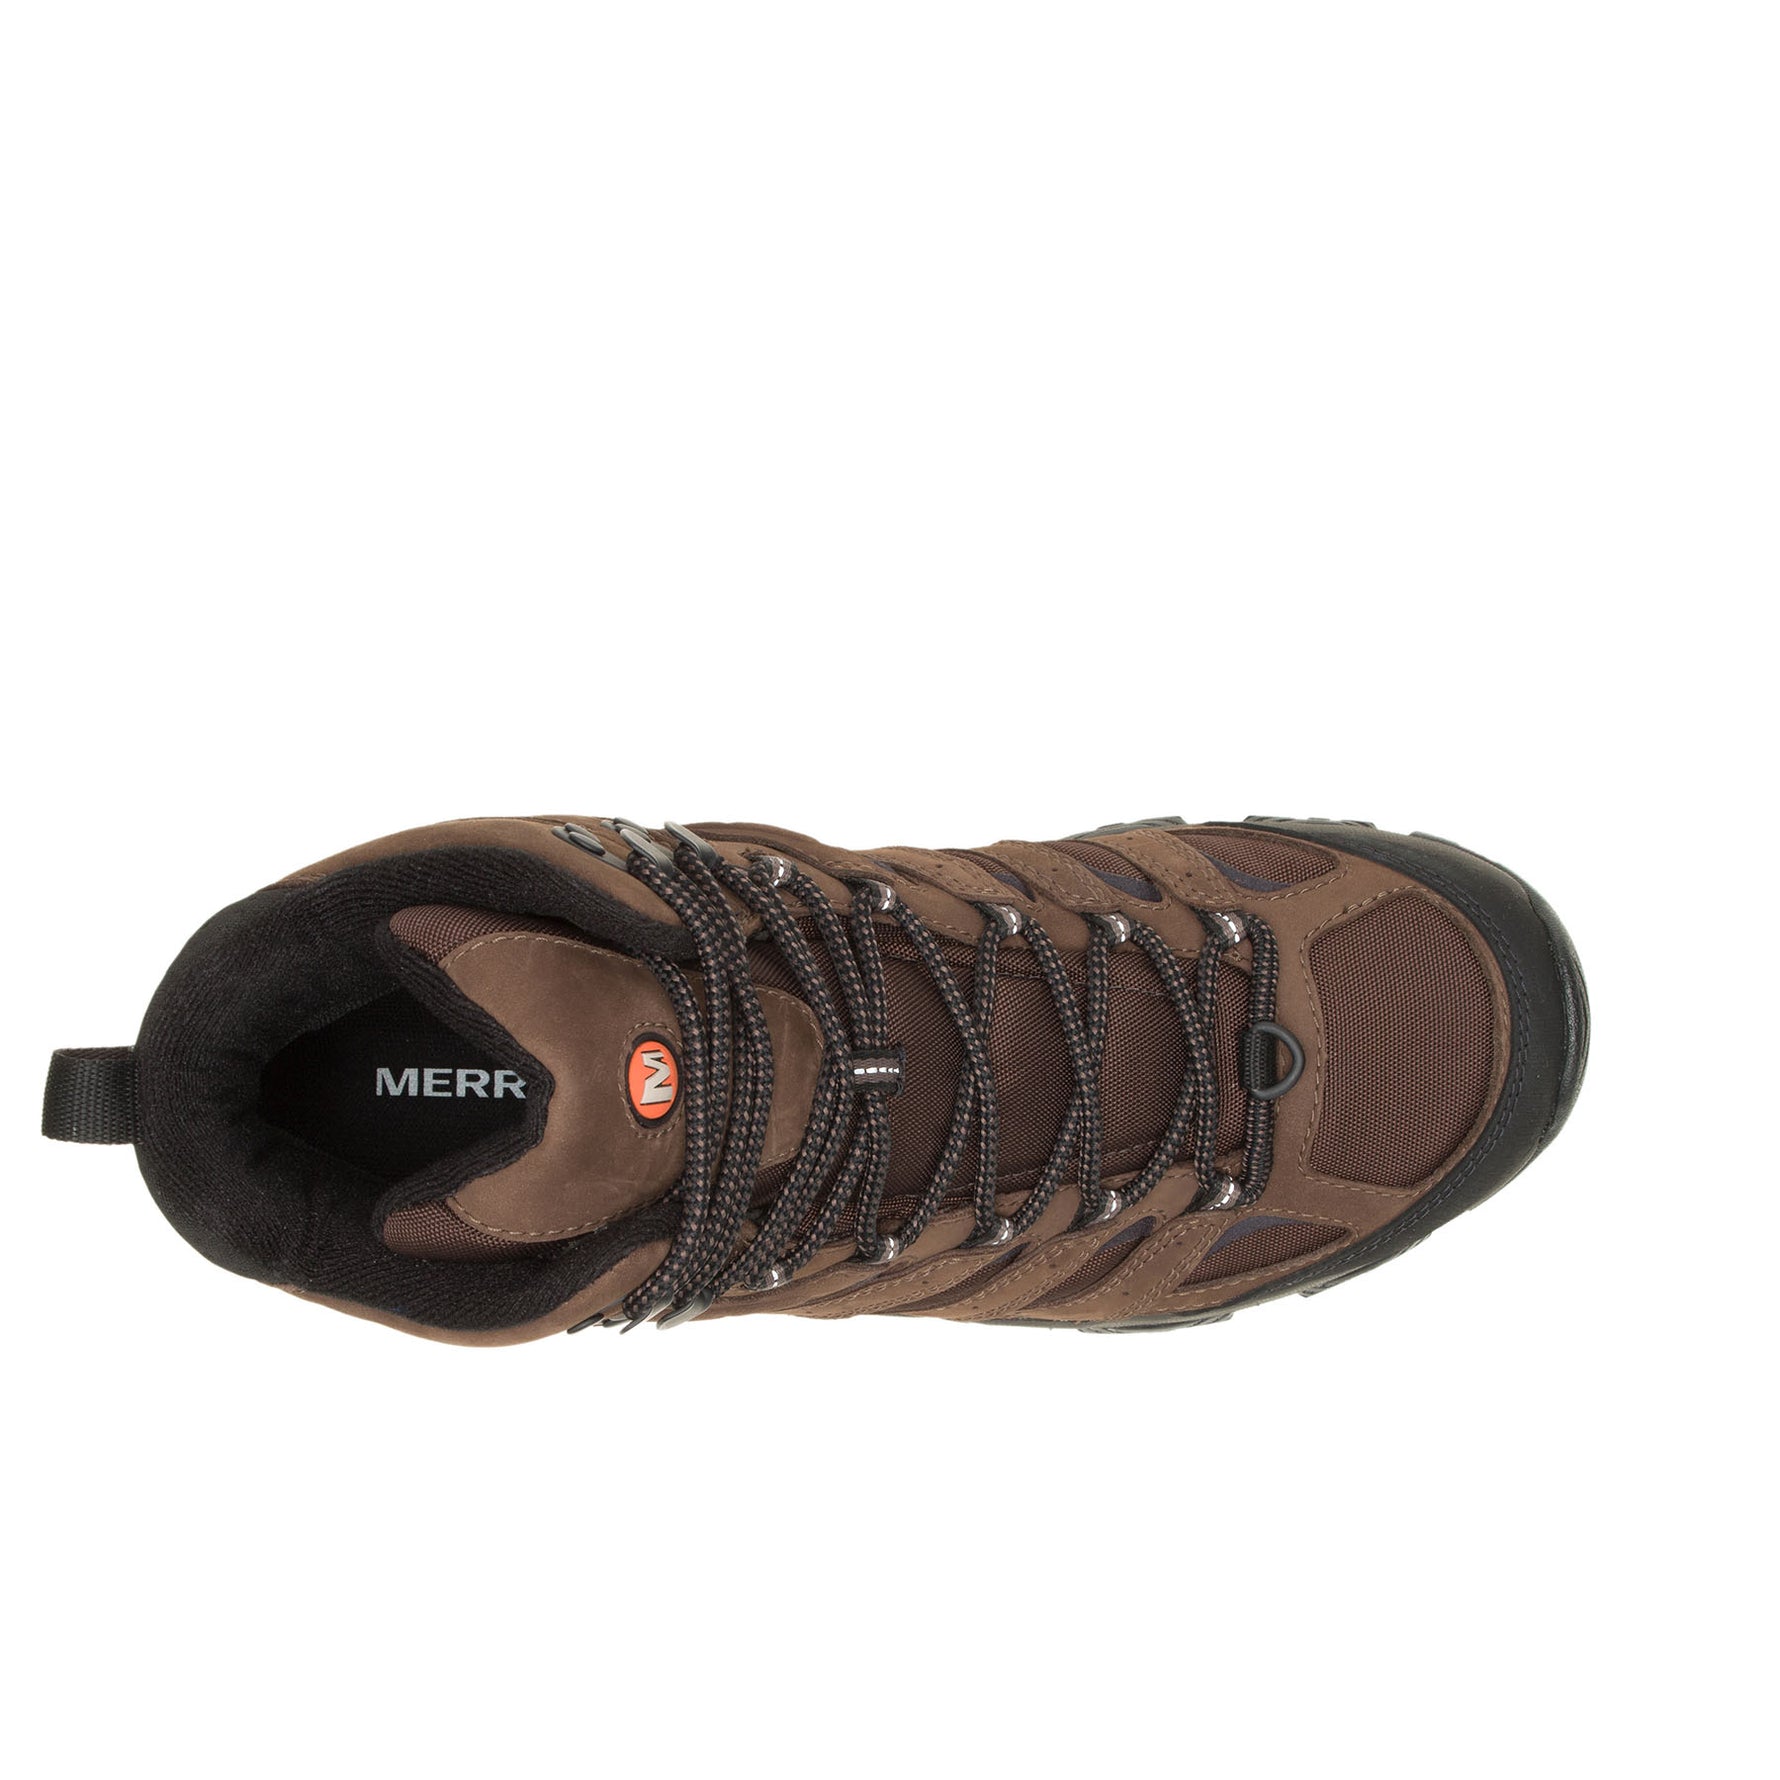 Merrell Men's Moab 3 Apex Mid Waterproof Hiking Boots 